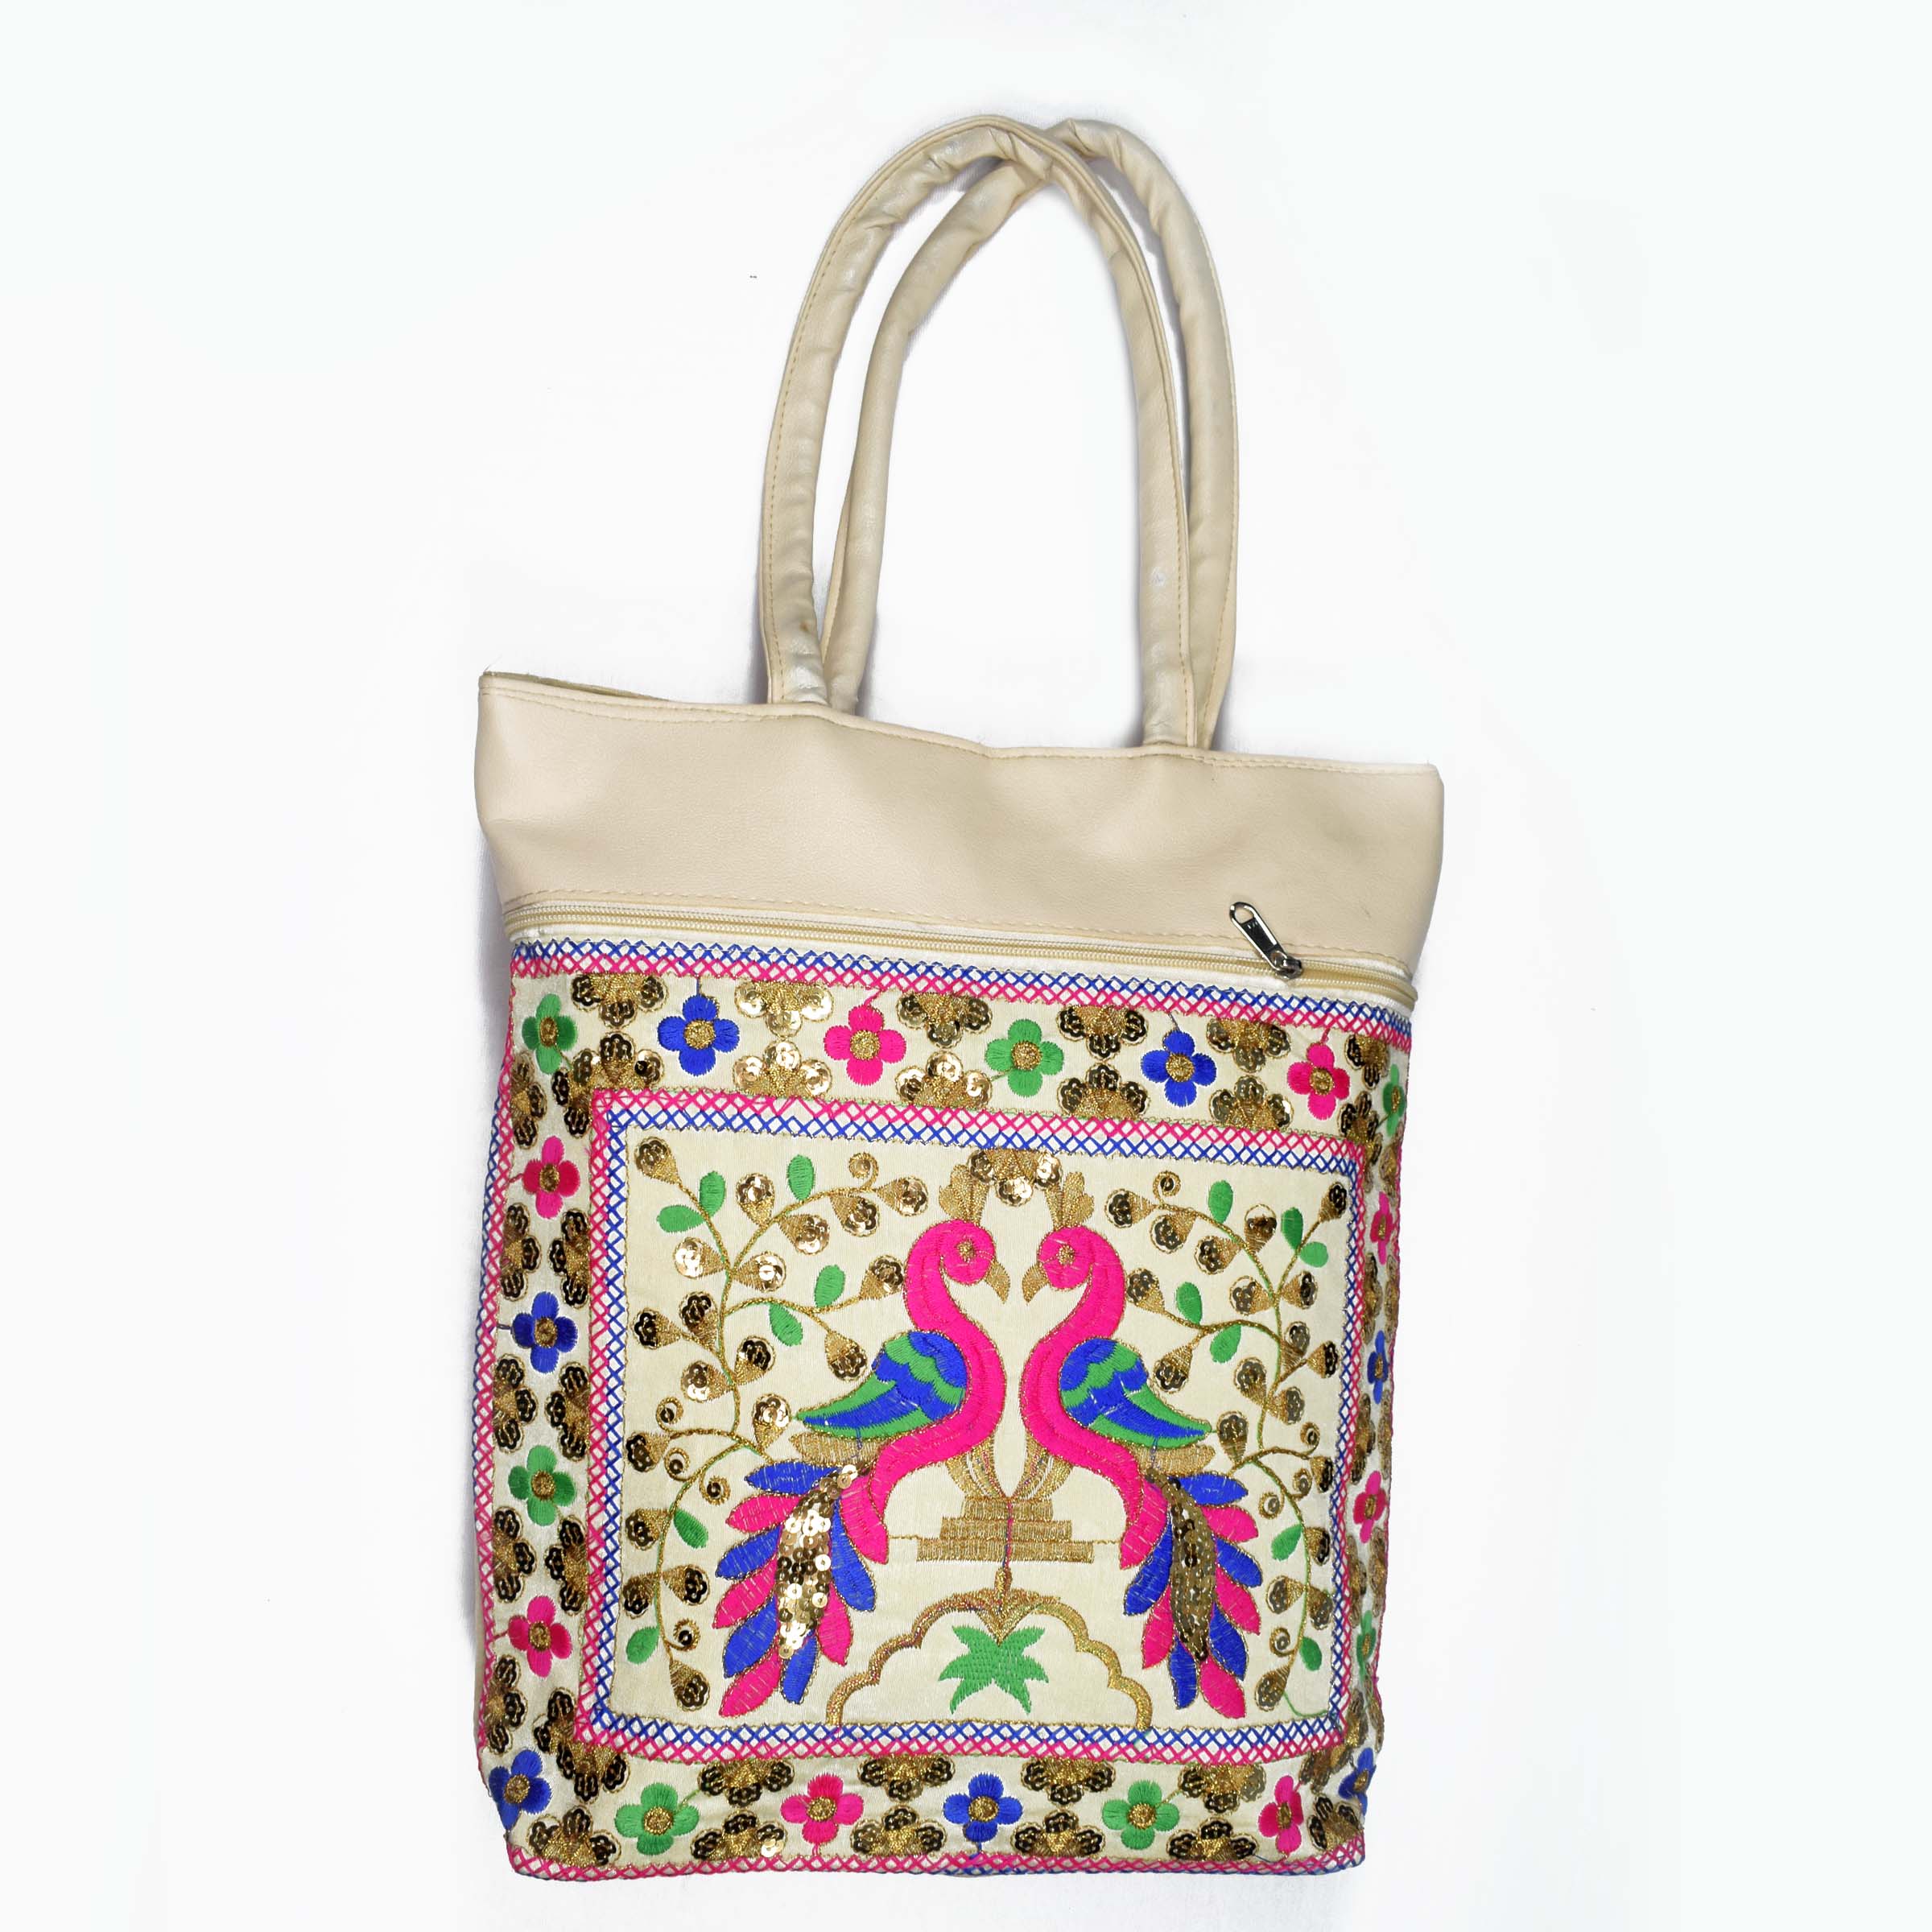 Jeweled peacock purse handbag - Gem